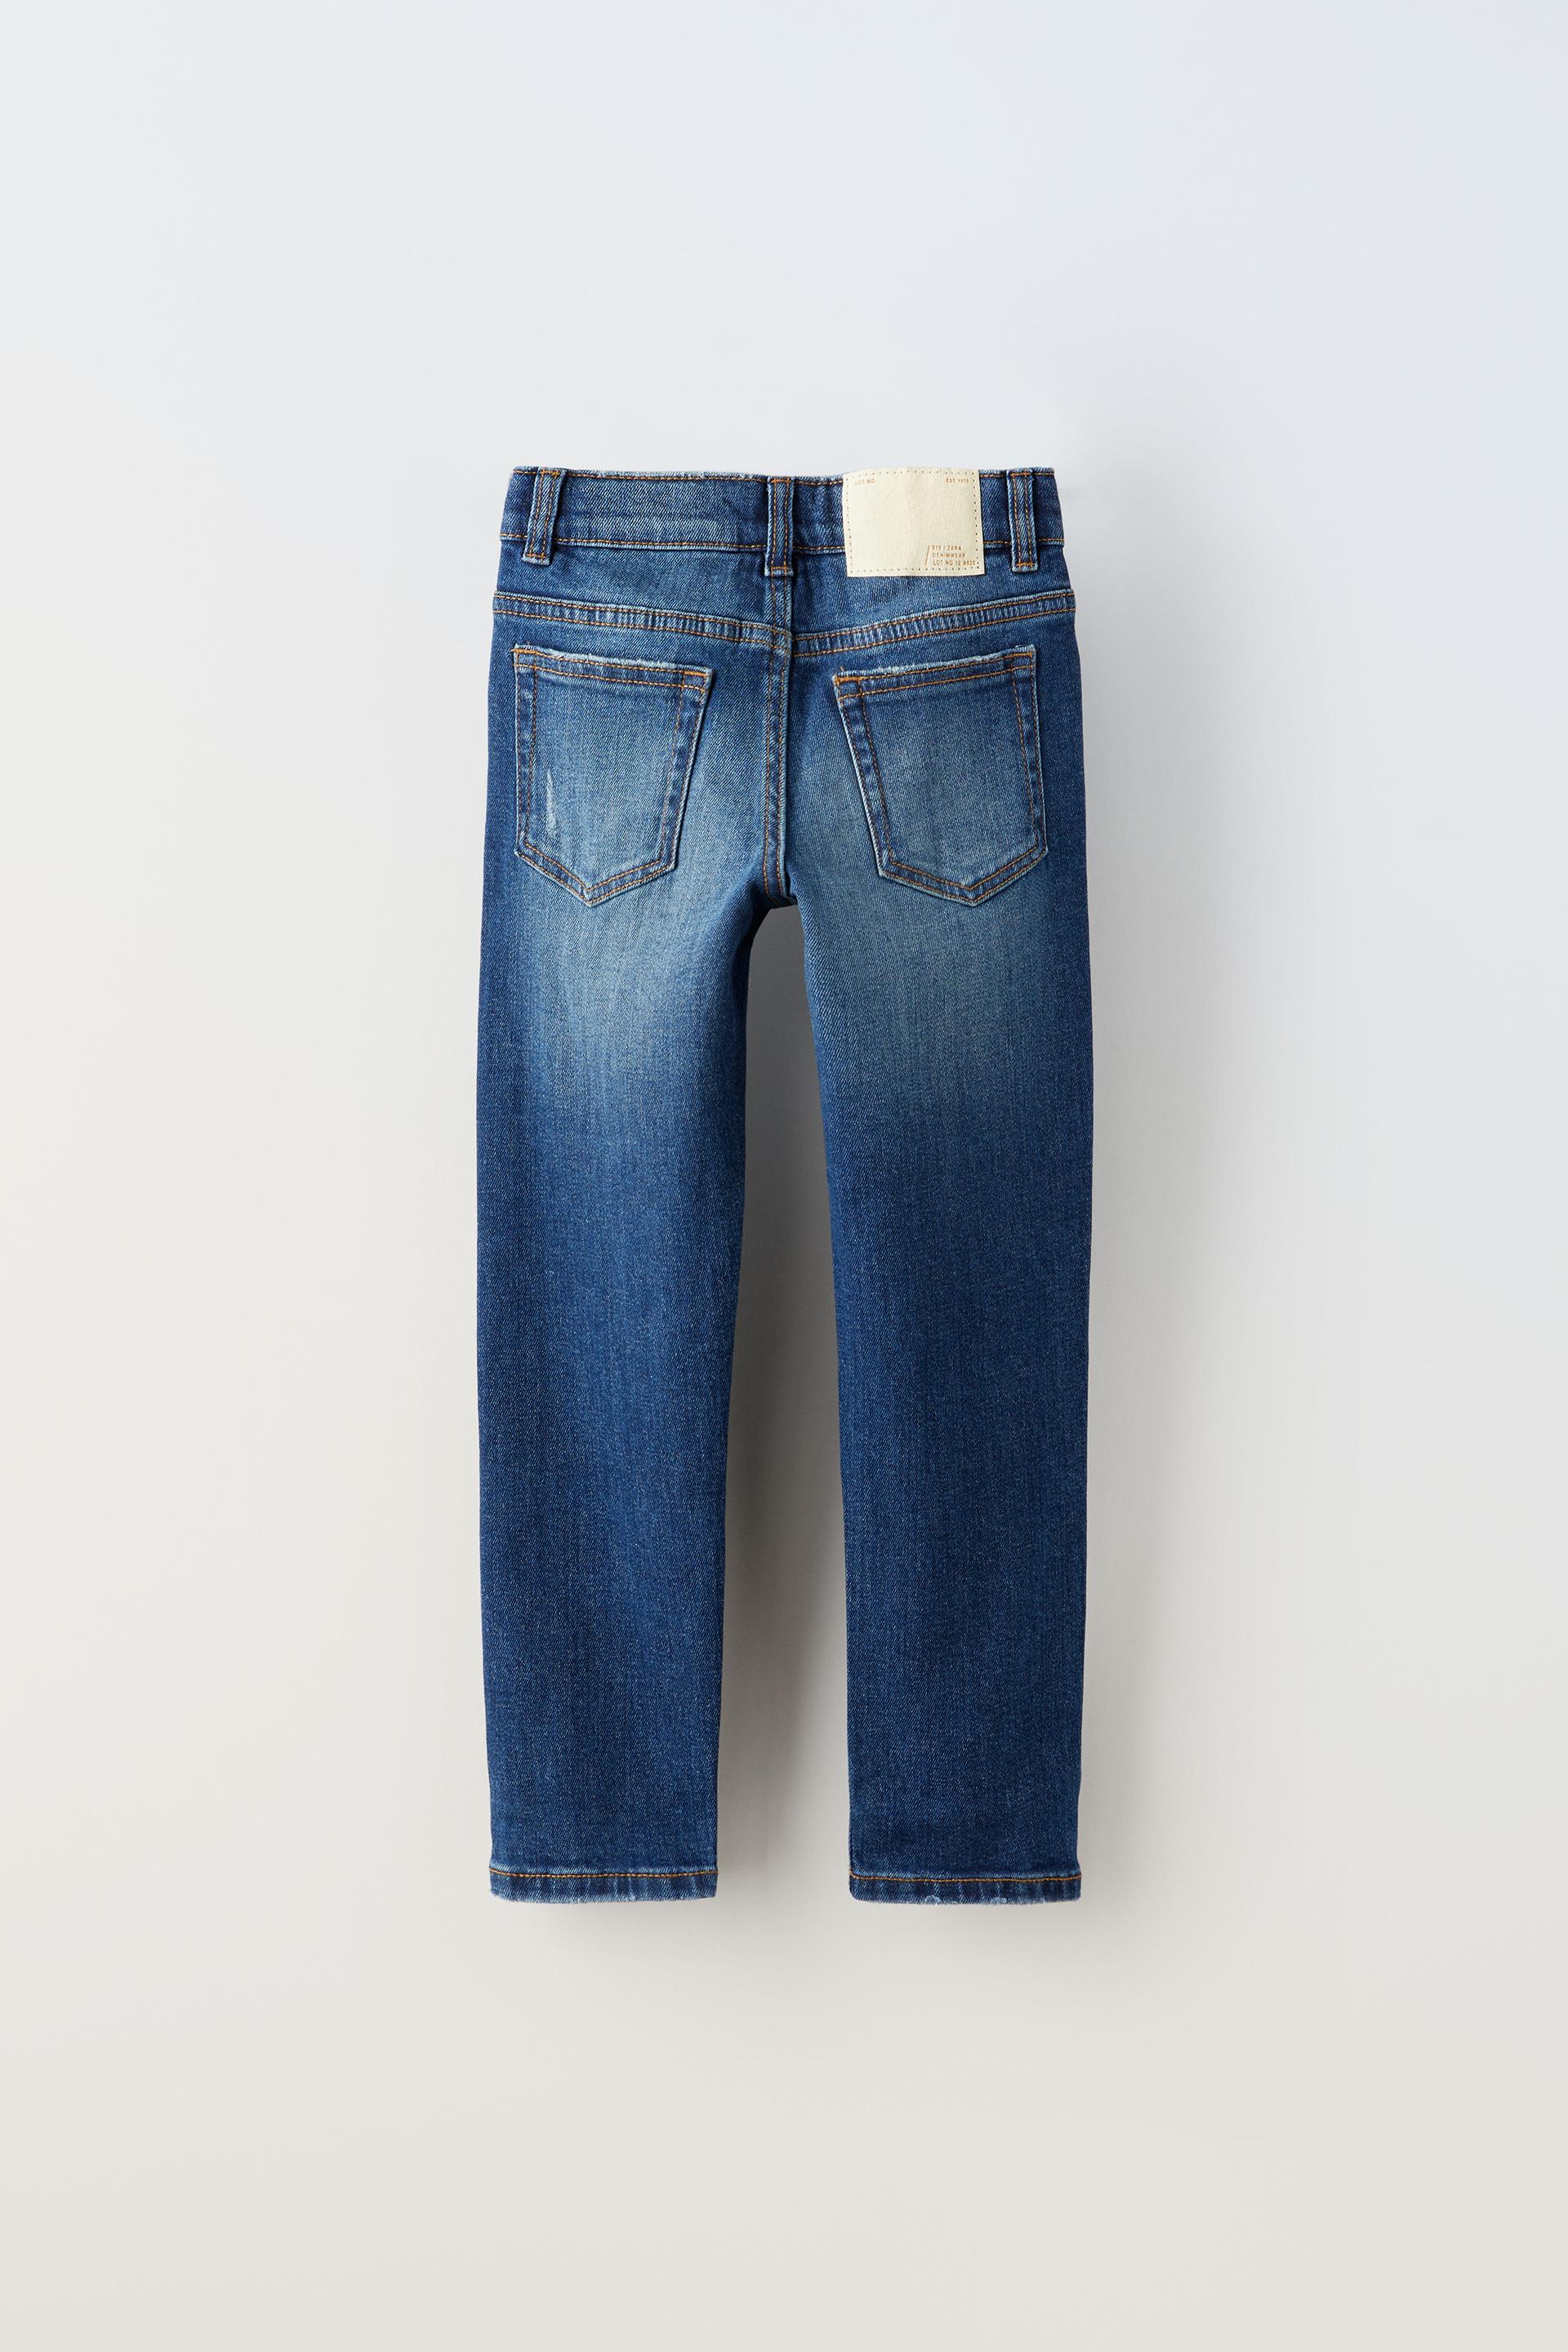 Zara's Denim Jeans Guide: Find the Perfect Fit